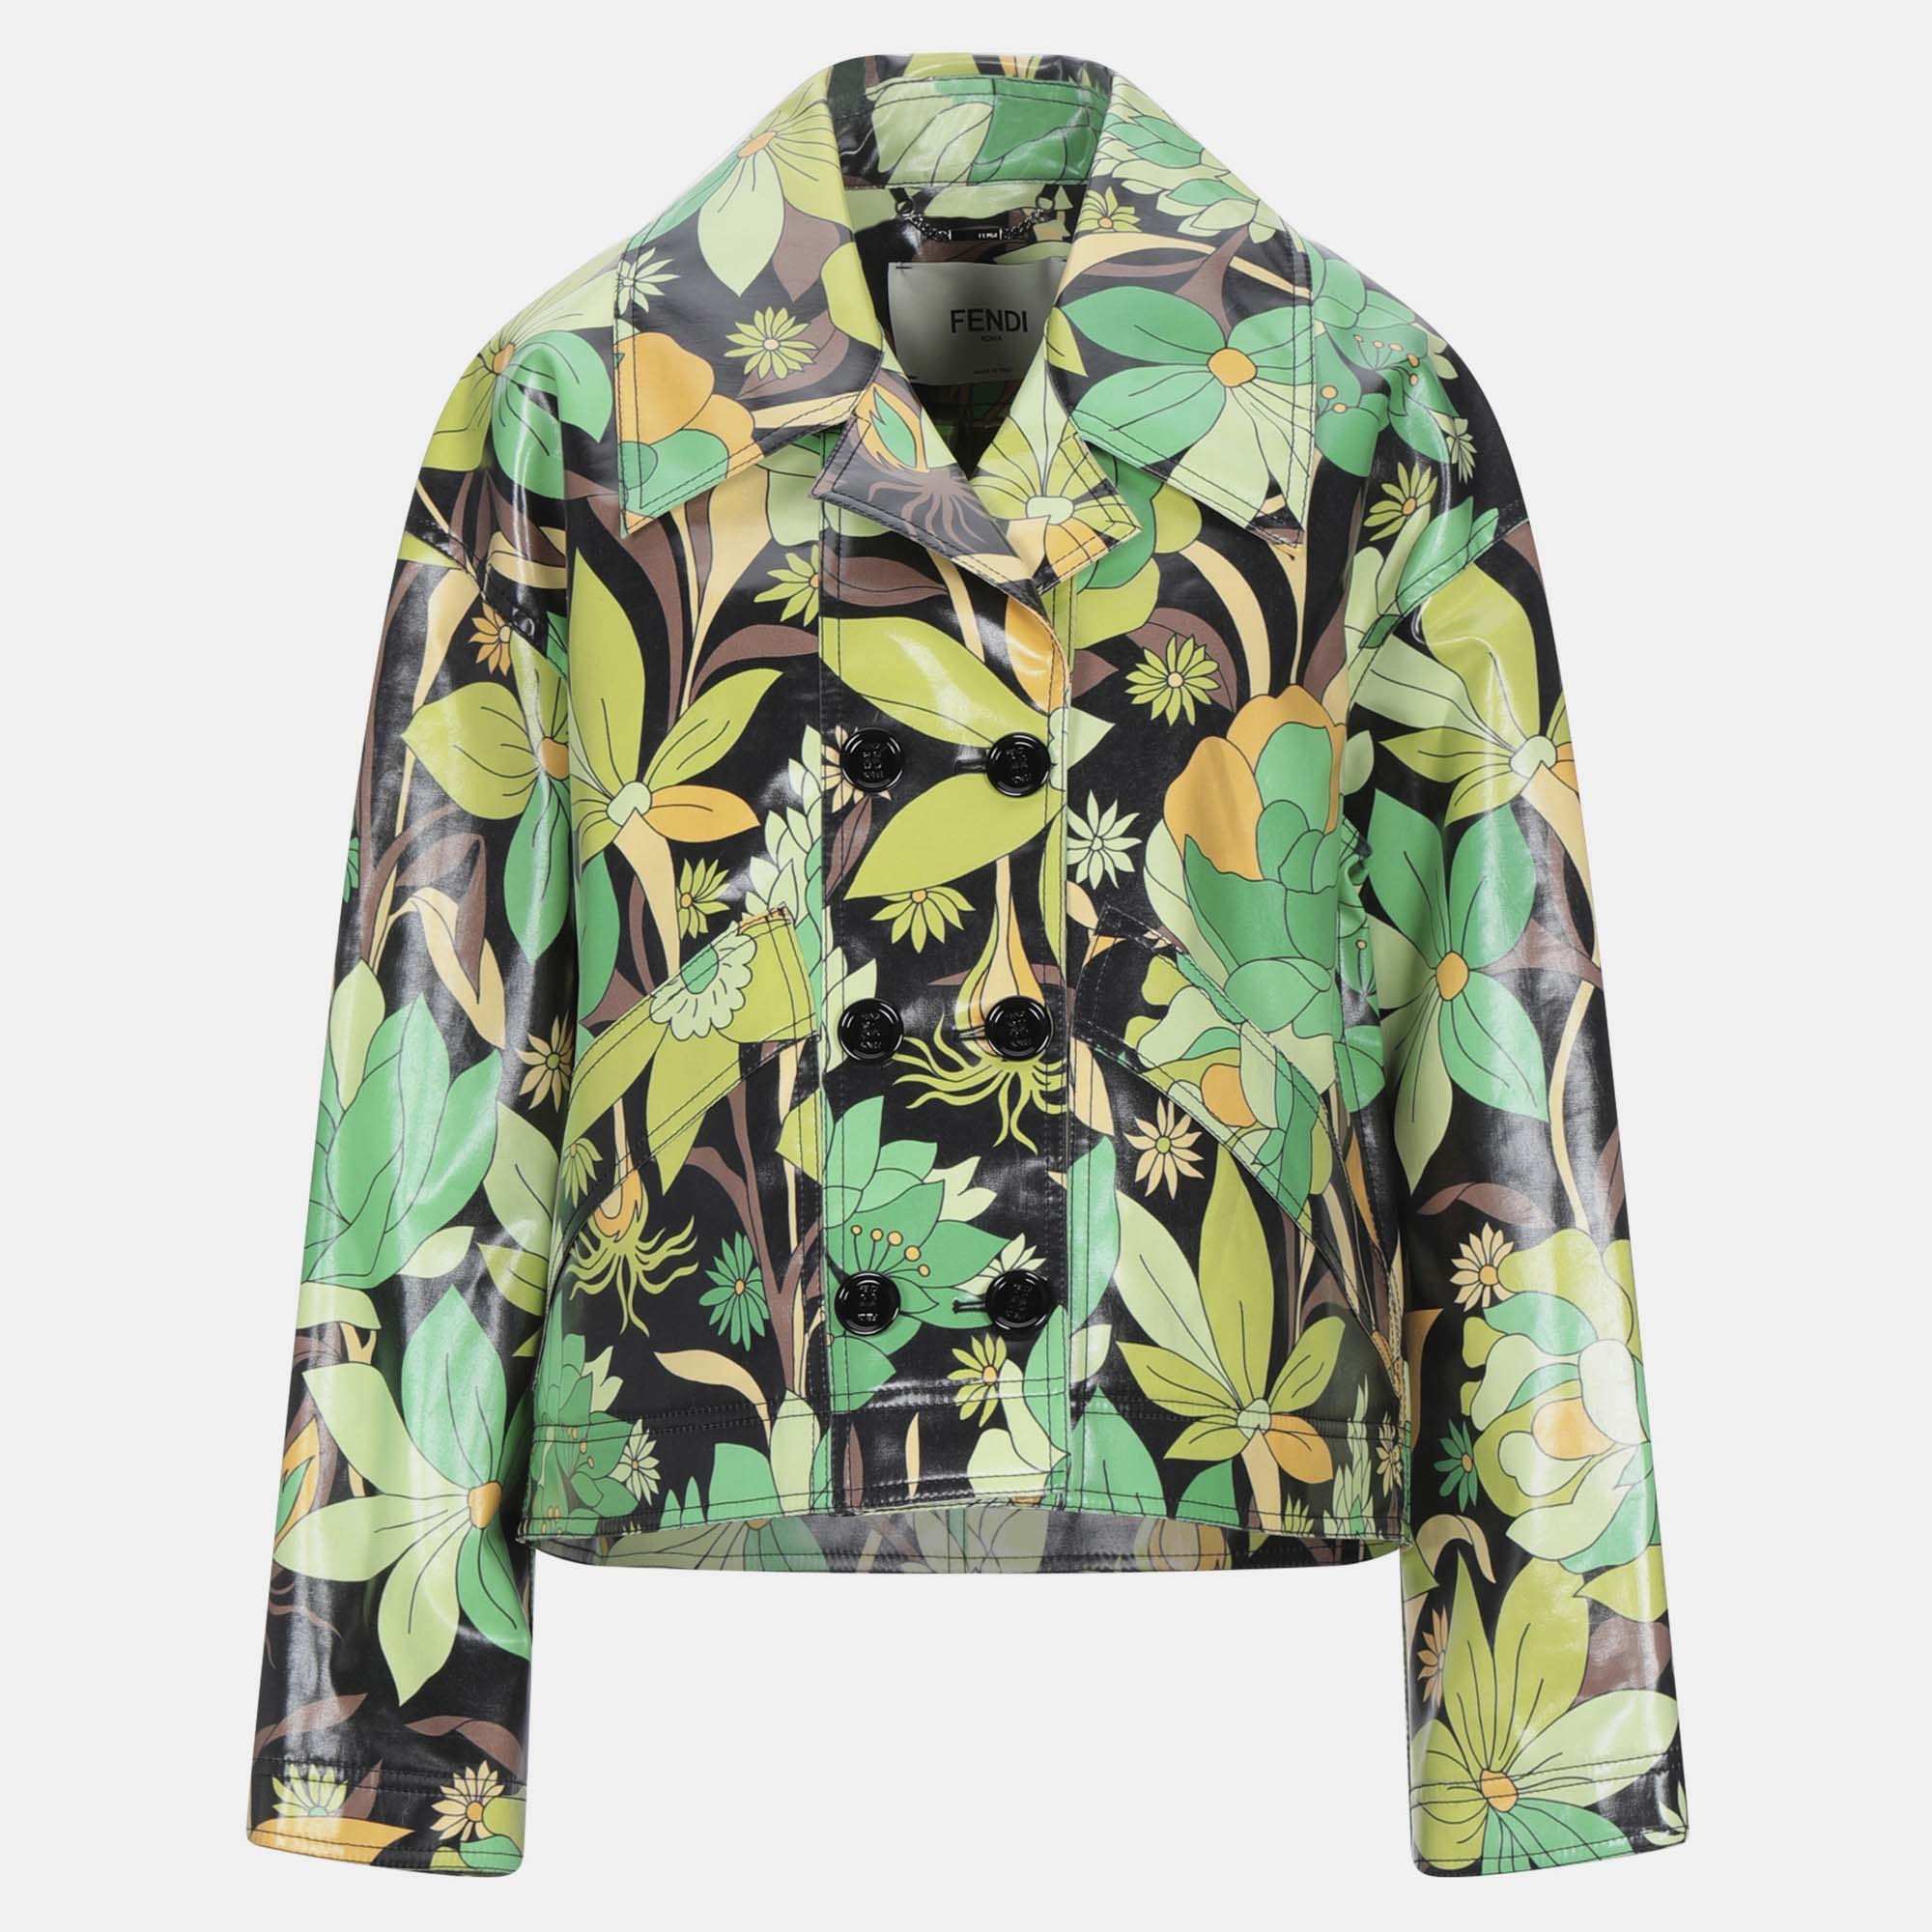 Fendi green/brown coated cotton jacket m (it 42)